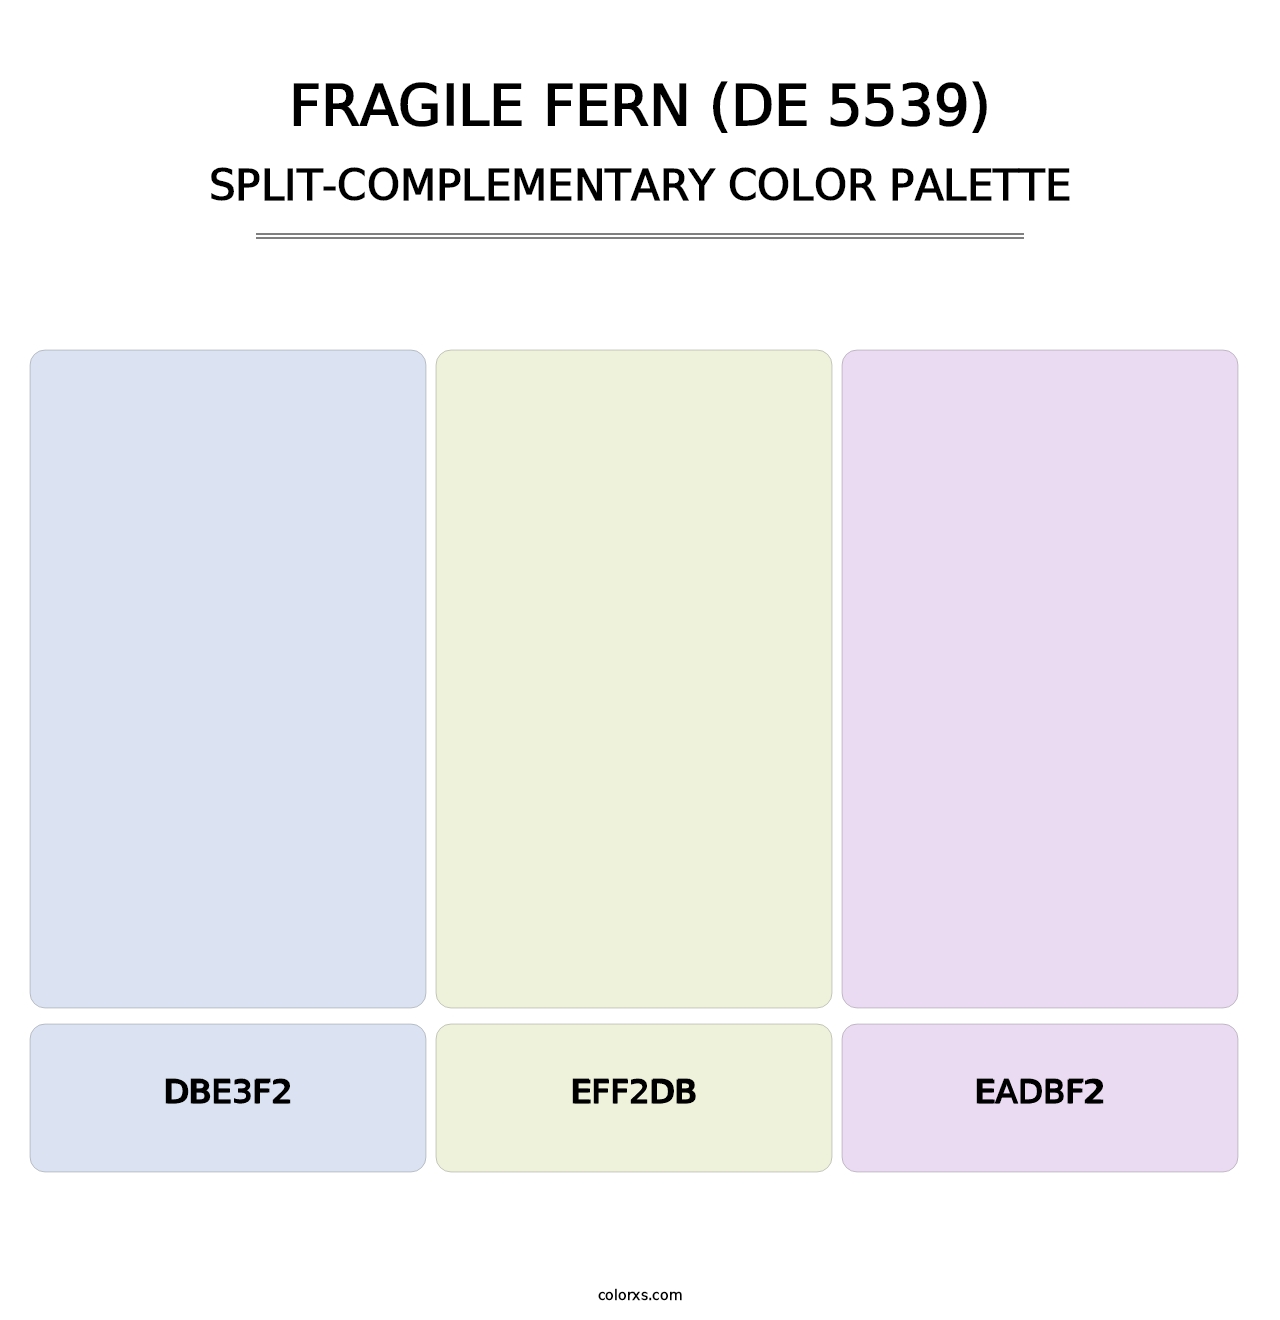 Fragile Fern (DE 5539) - Split-Complementary Color Palette